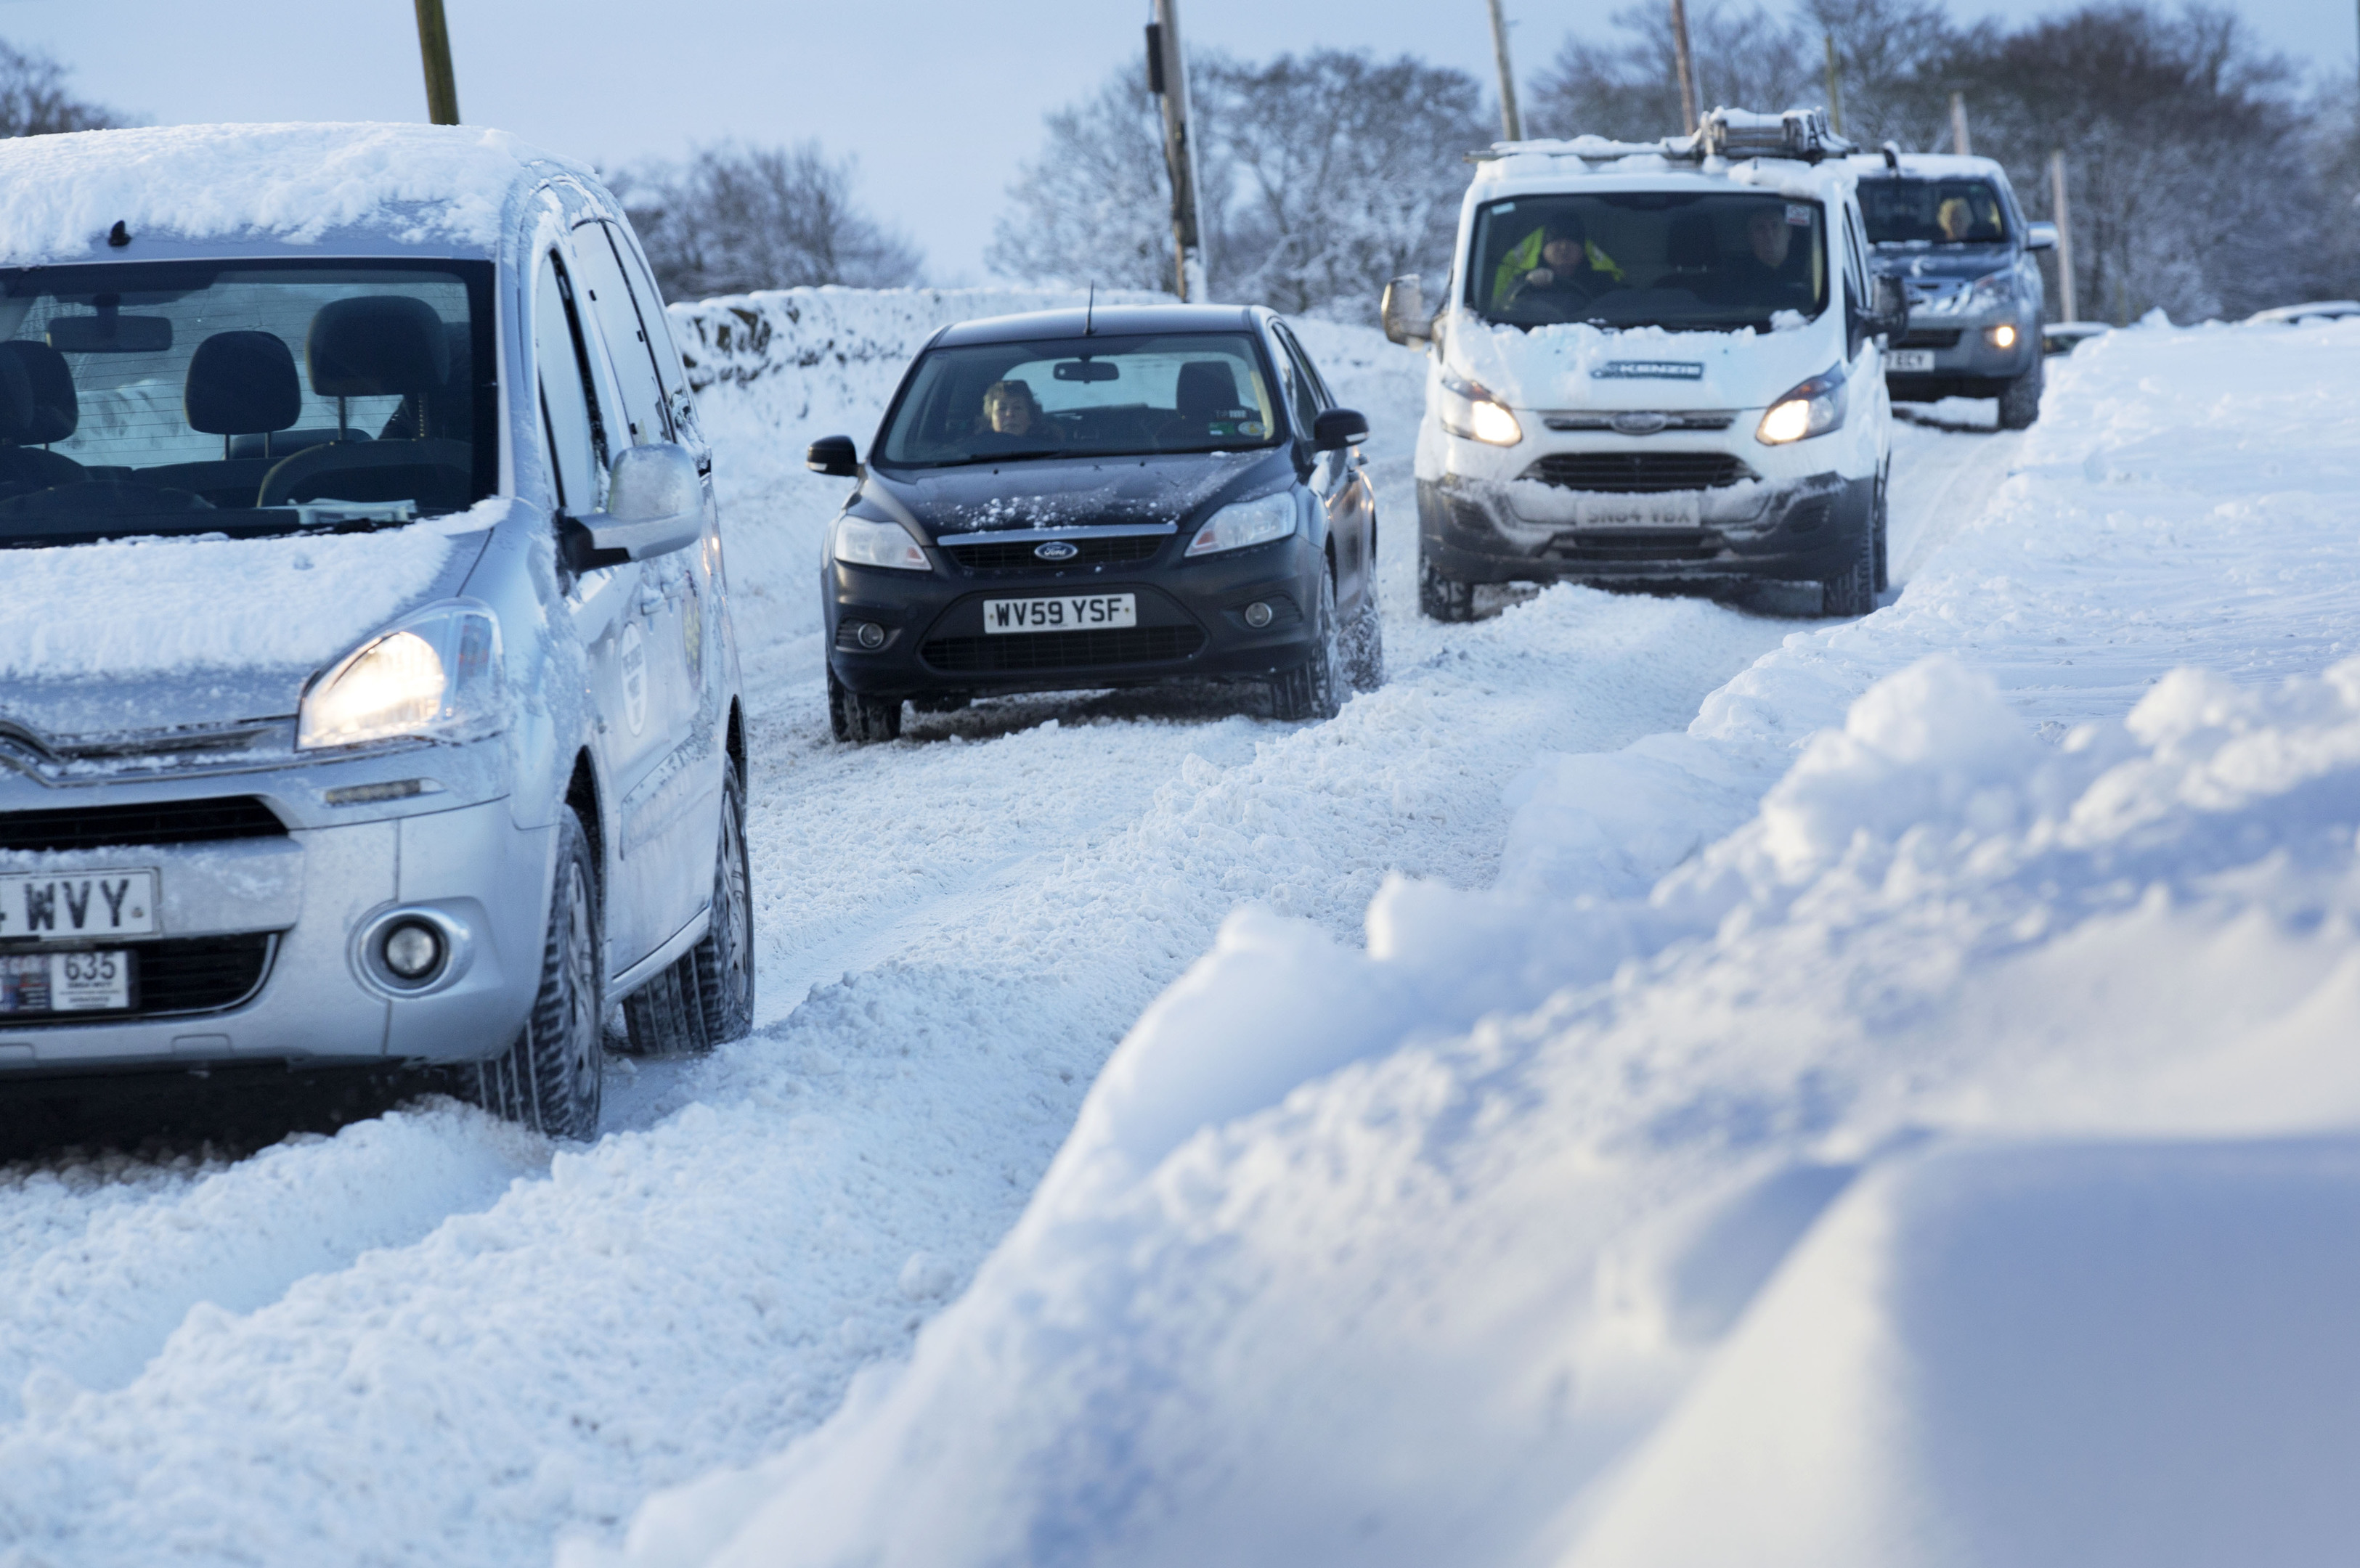 Vehicles make their way through heavy snow in Midlothian near Edinburgh. January 17, 2018. (David Cheskin/PA Wire)